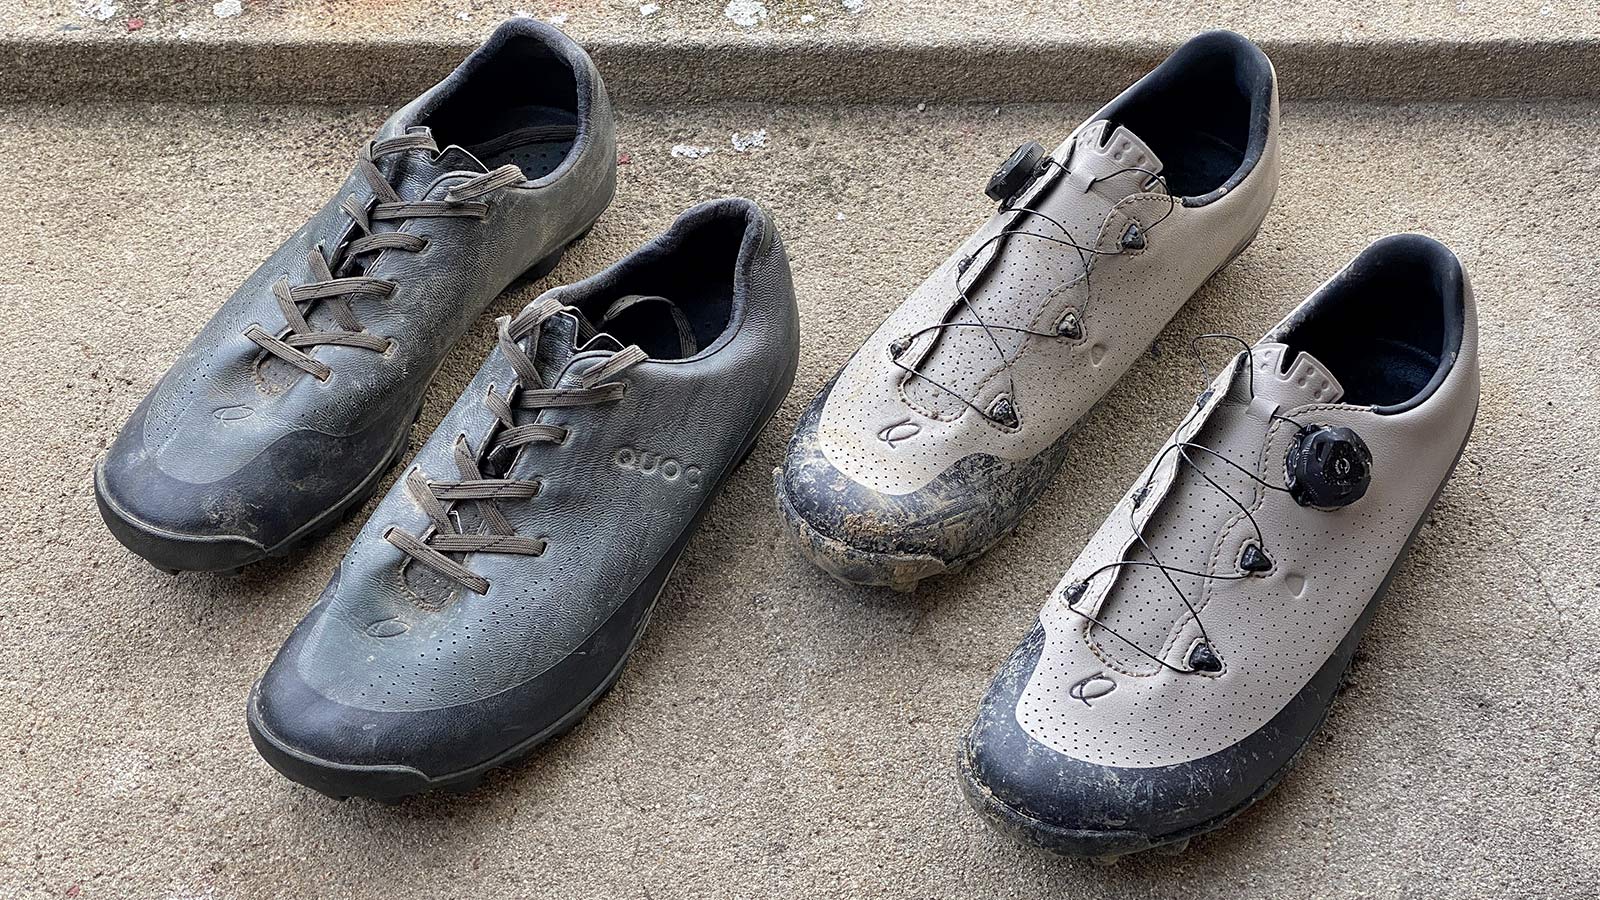 Quoc Gran Tourer II vs. original Gran Tourer gravel bike shoes, review side-by-side